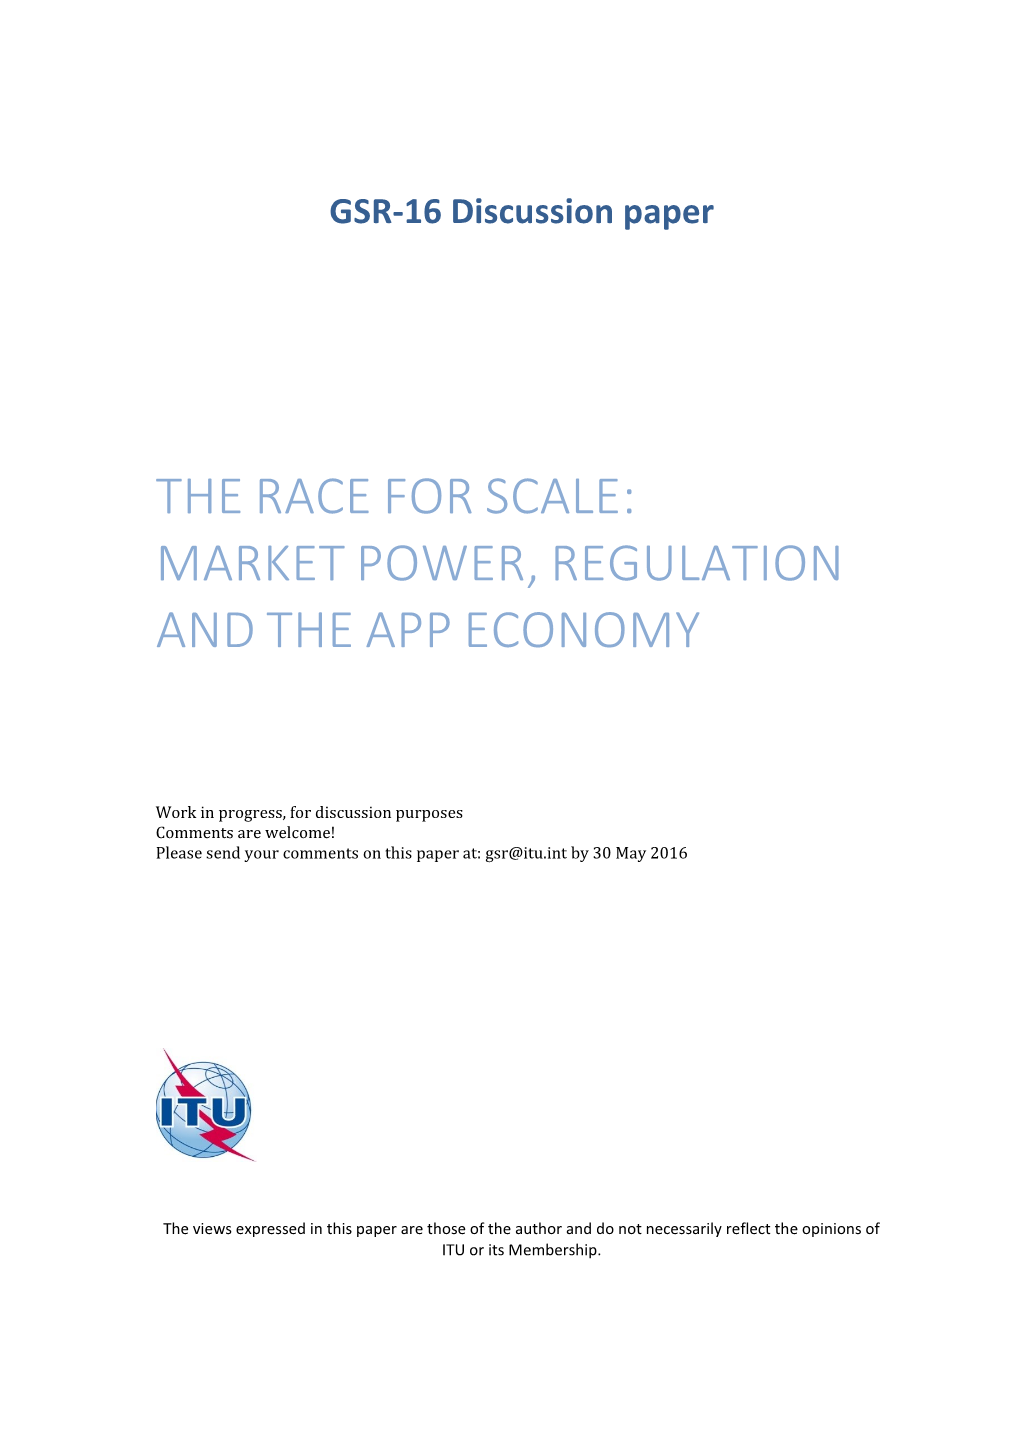 Market Power, Regulation and the App Economy